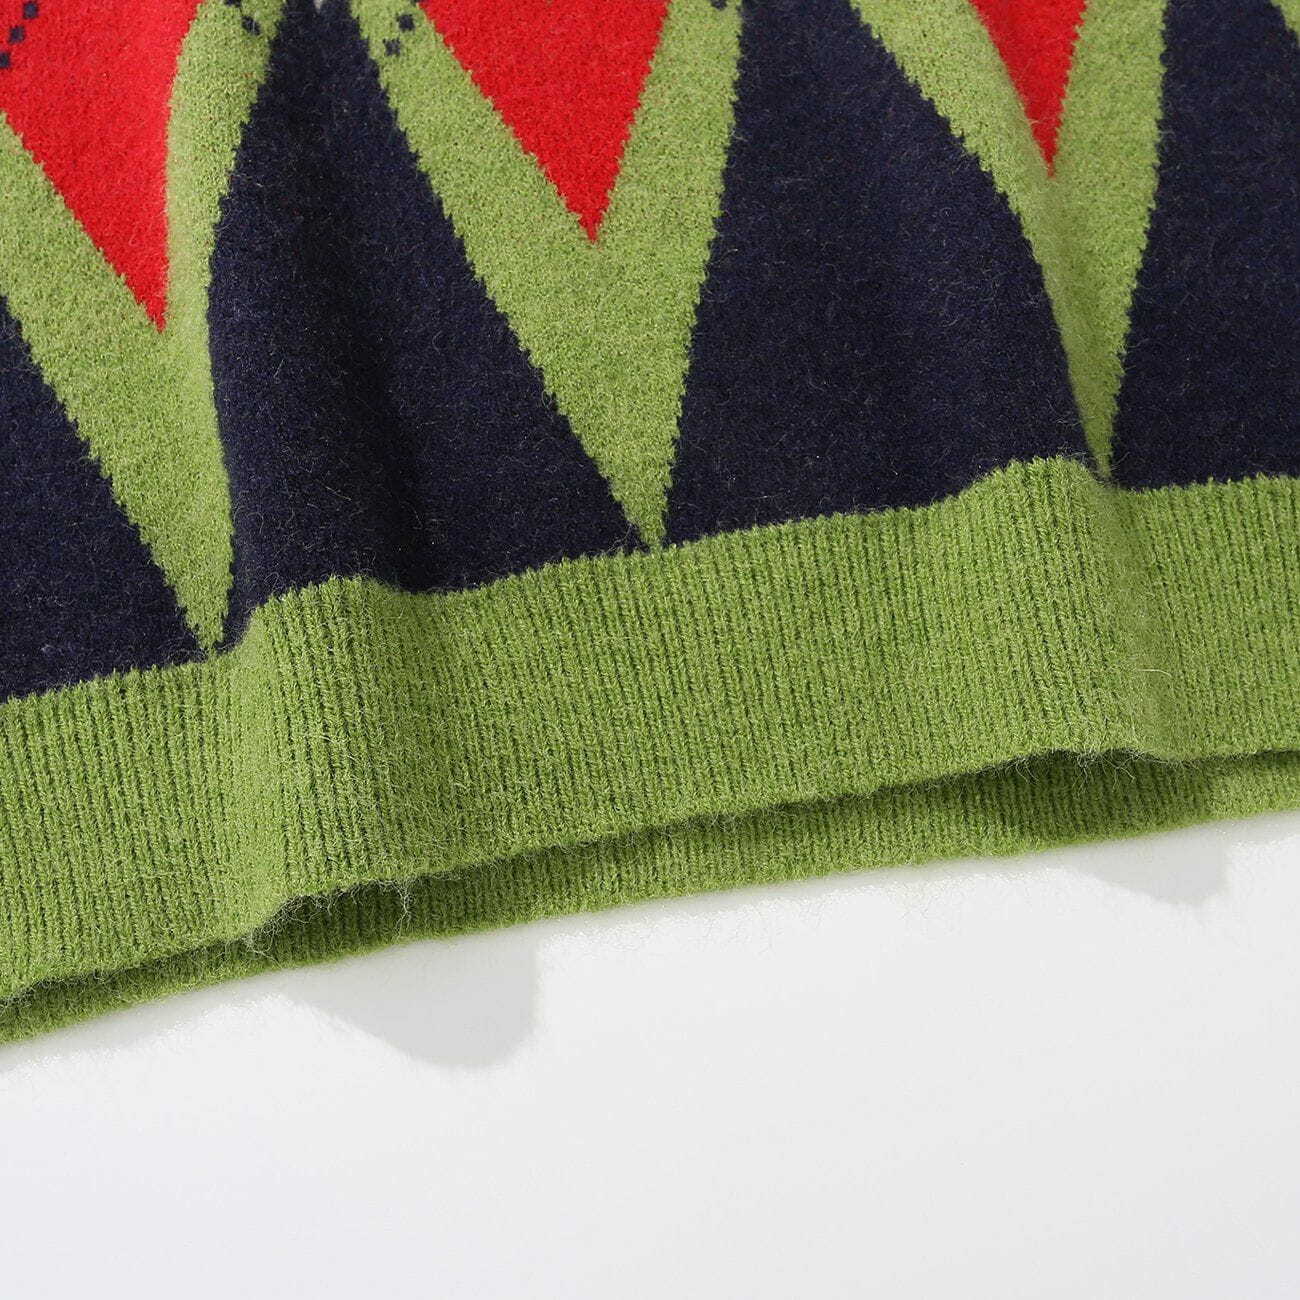 diamond knit sweater vest vintage chic statement 4357